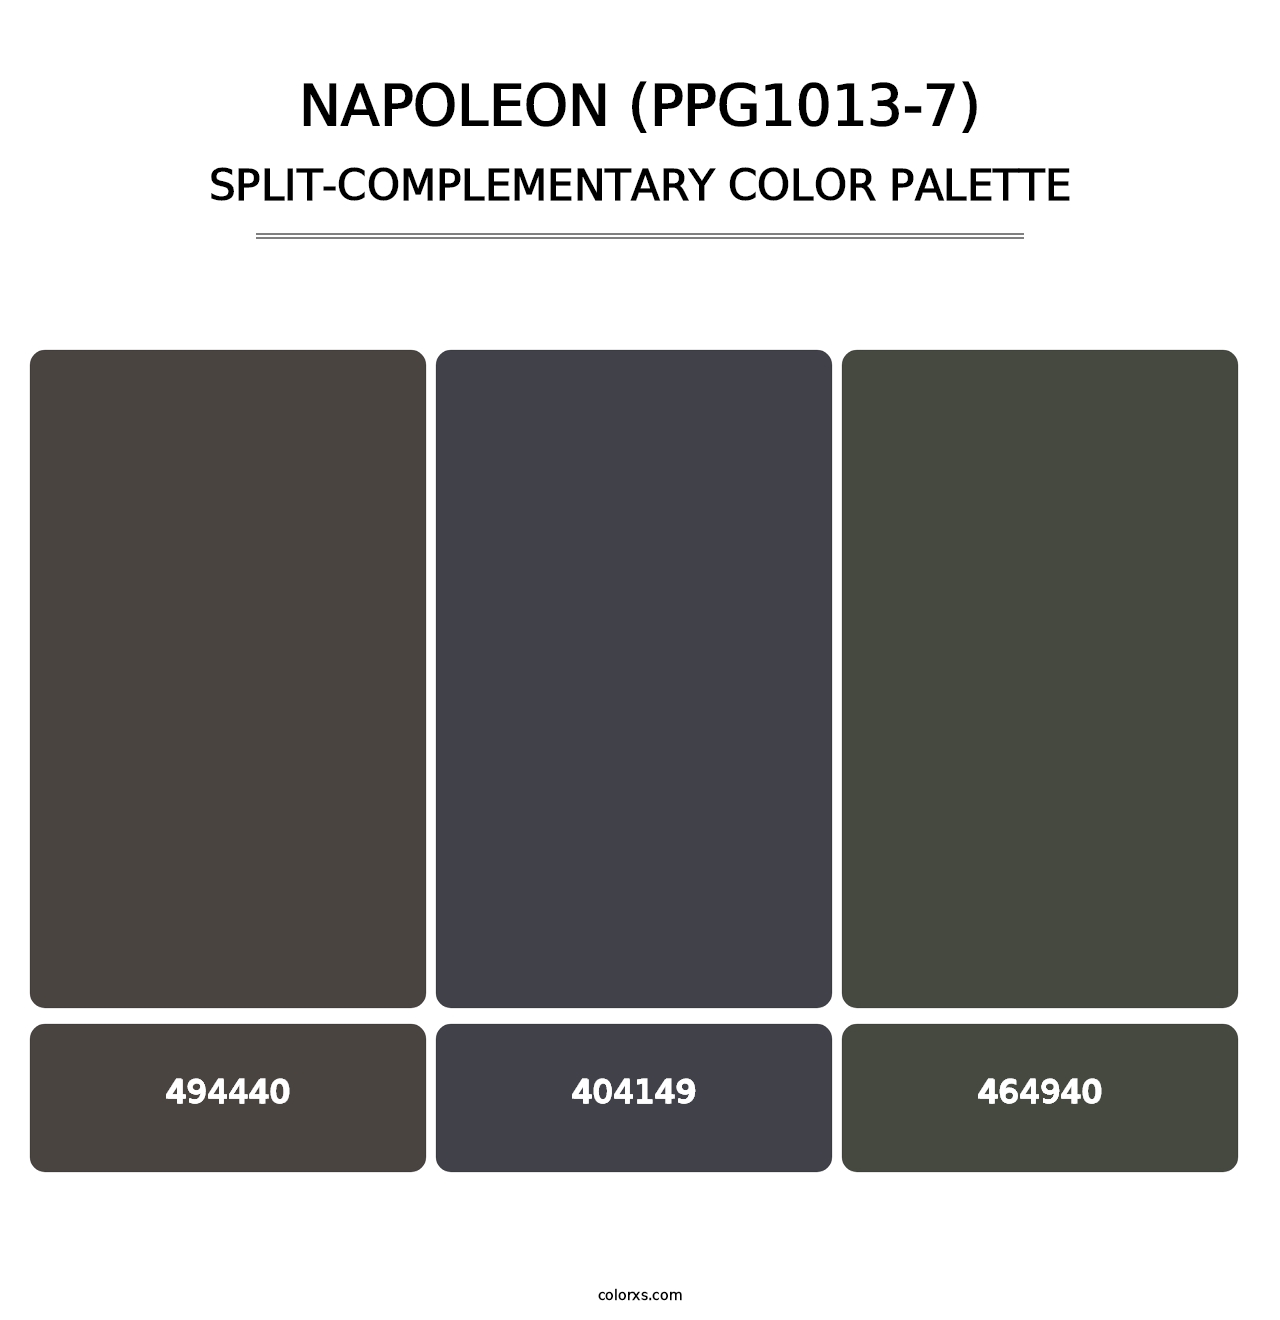 Napoleon (PPG1013-7) - Split-Complementary Color Palette